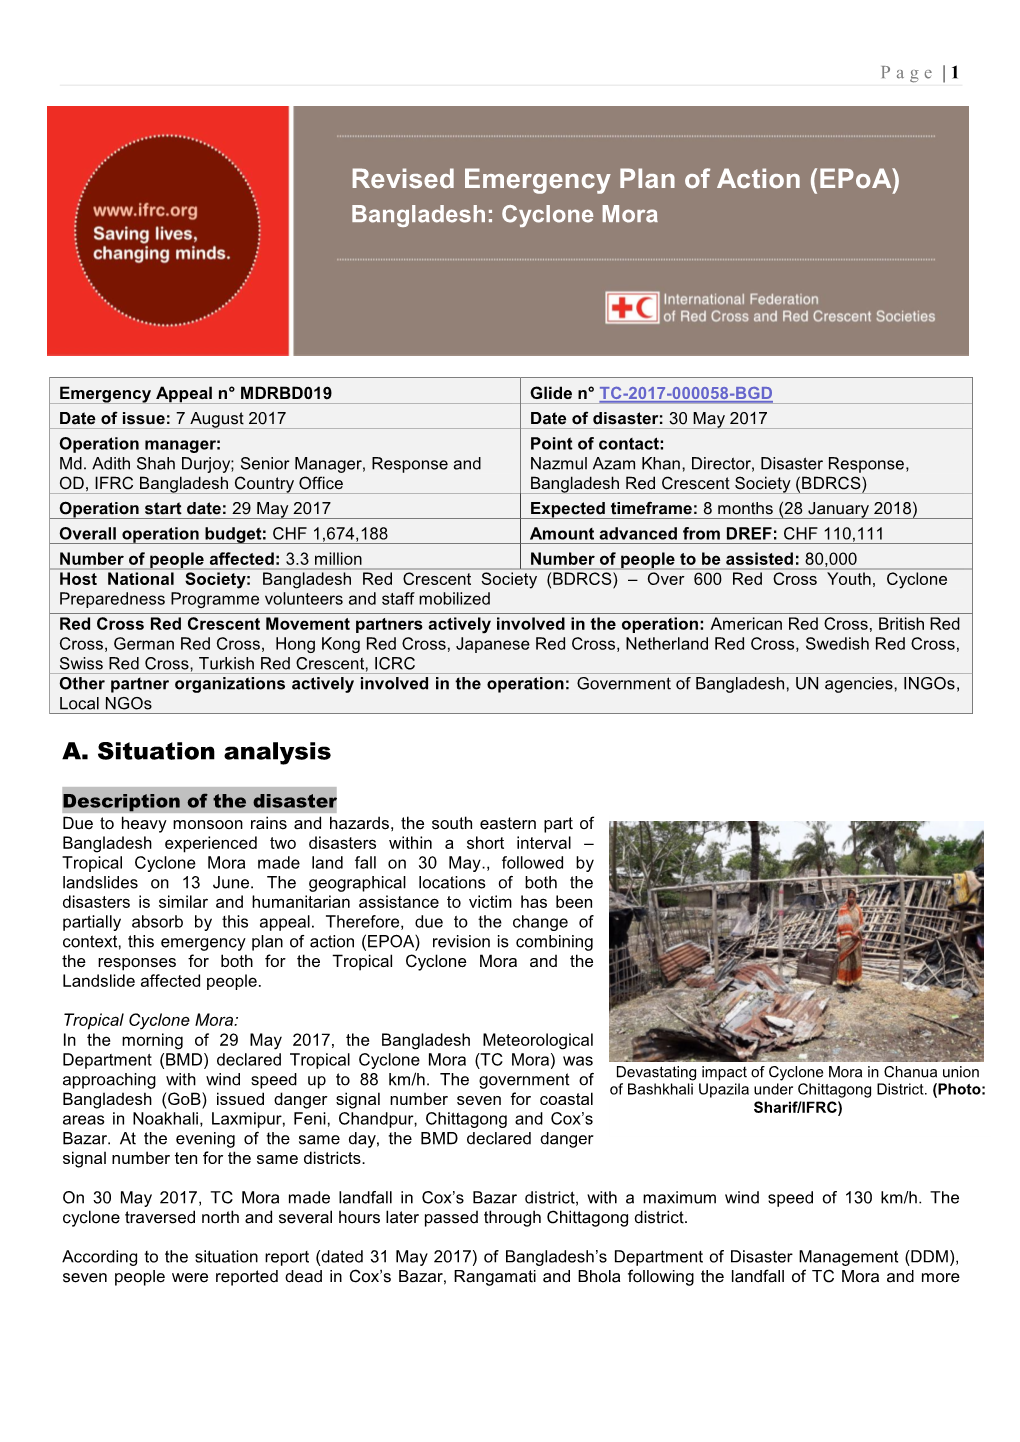 Revised Emergency Plan of Action (Epoa) Bangladesh: Cyclone Mora